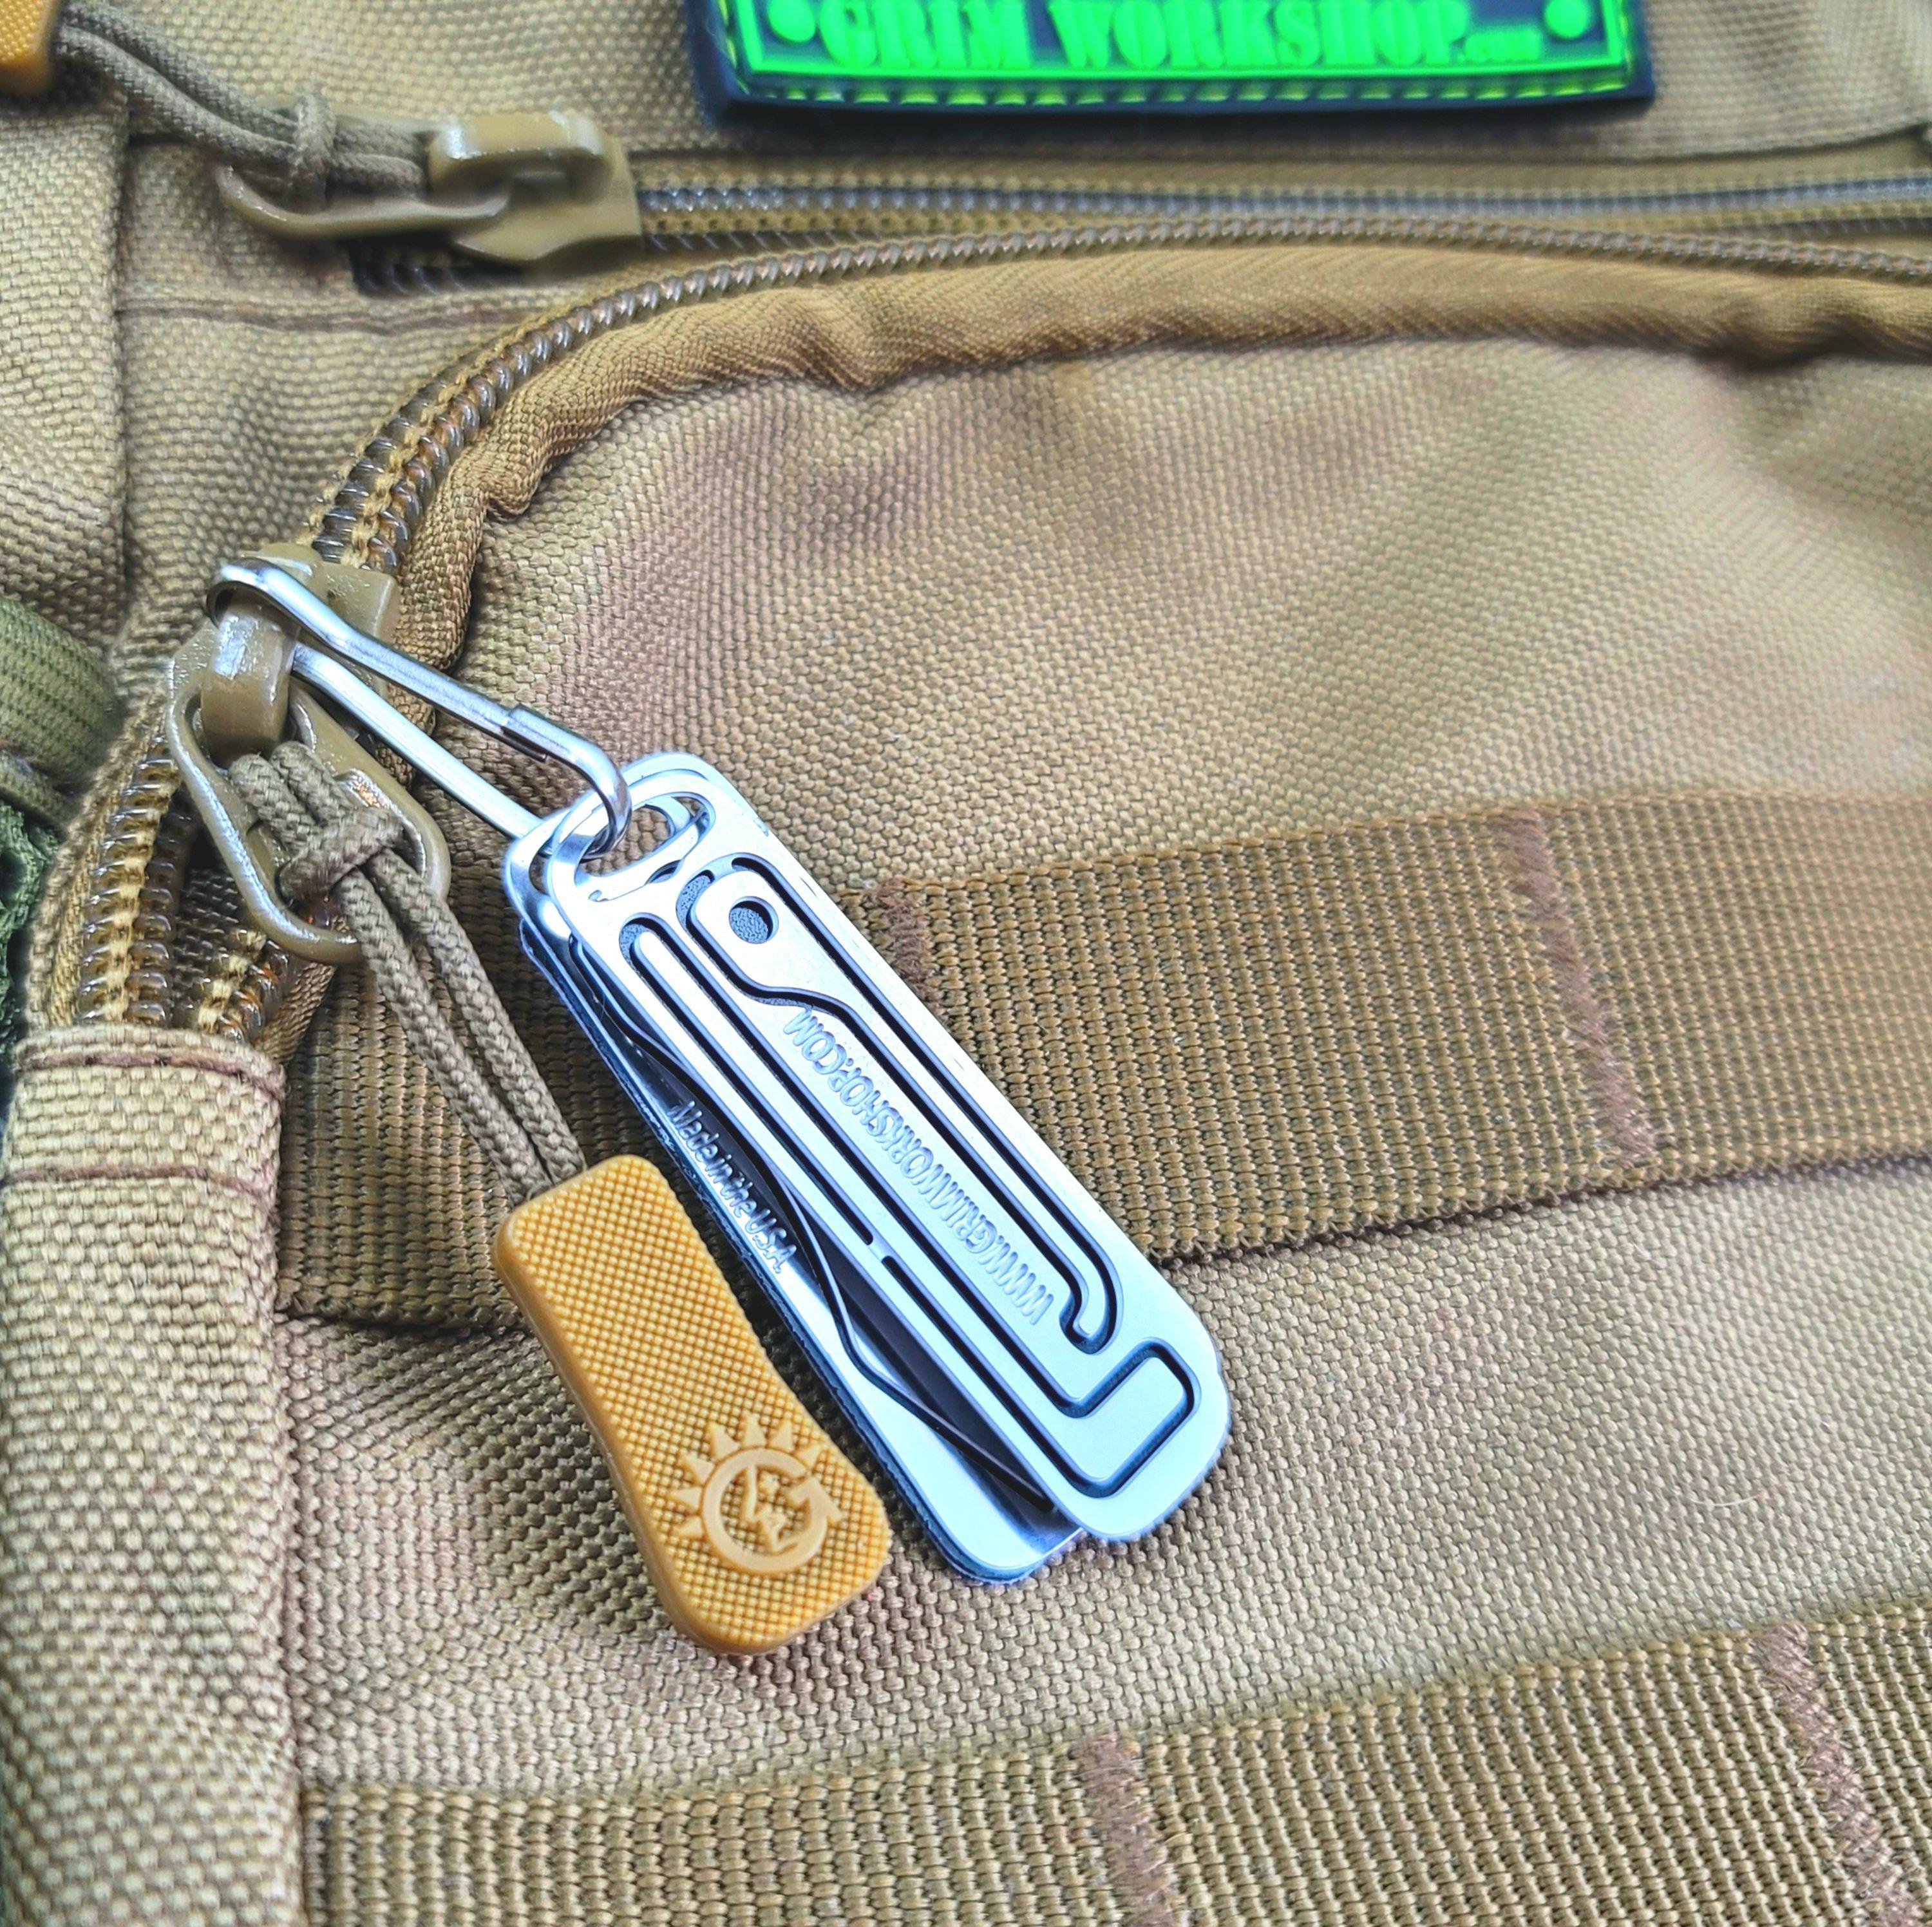 individual lock picks 2 in 1 lock pick tool for a pocket urban survival kit